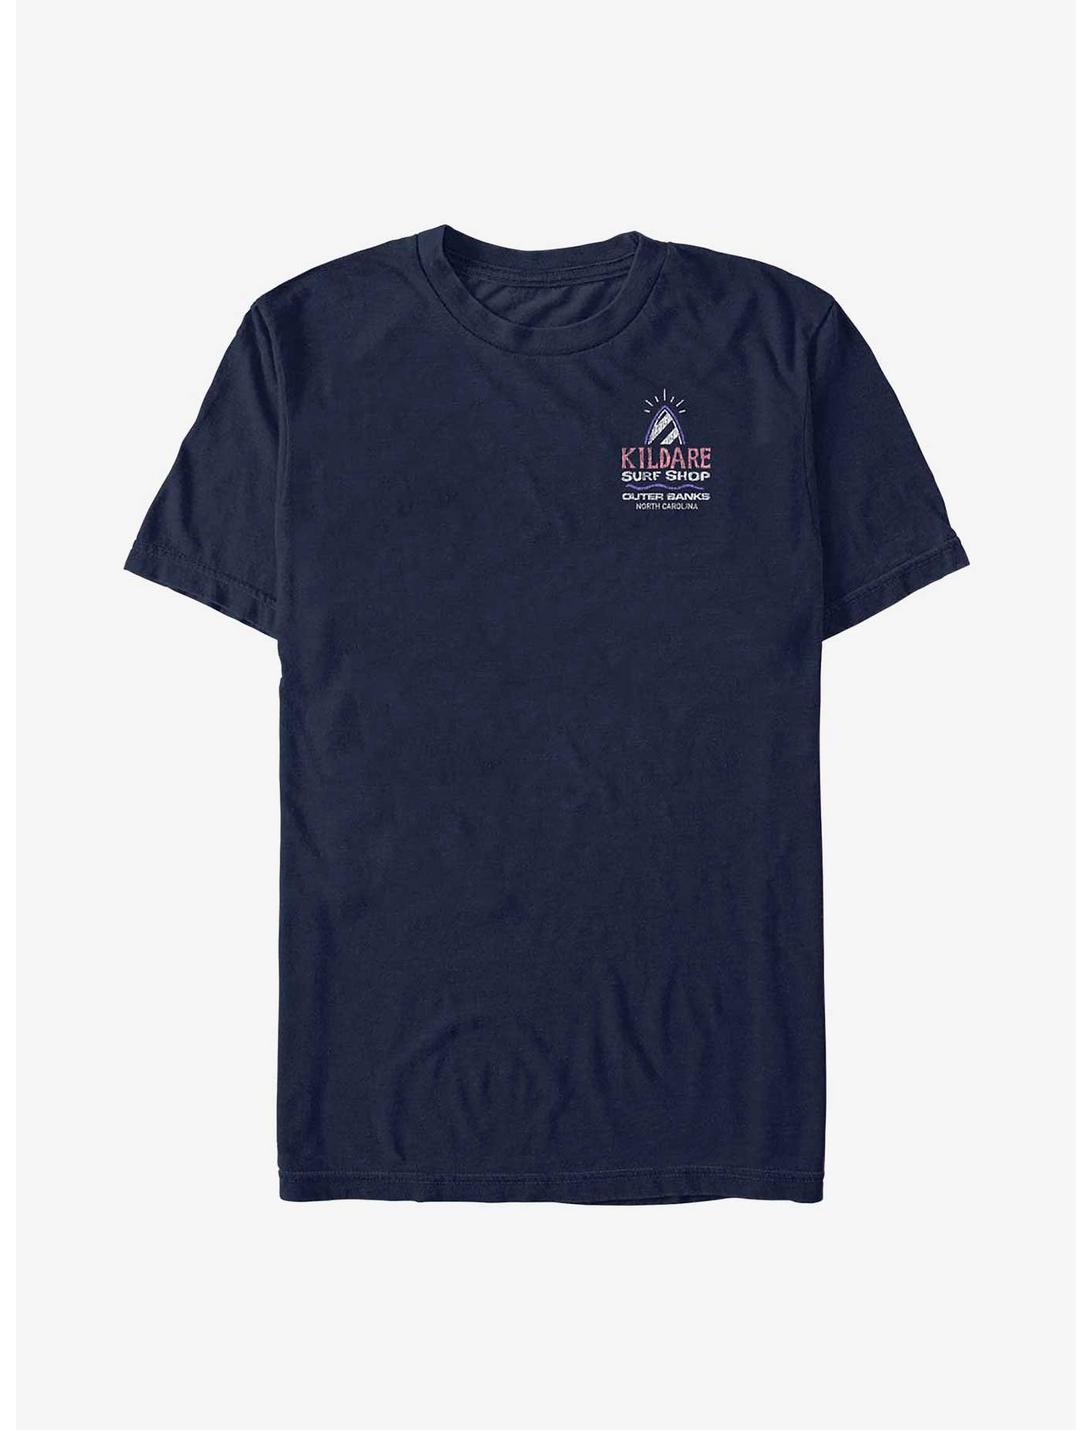 Outer Banks Kildare Surf Shop Logo T-Shirt, NAVY, hi-res